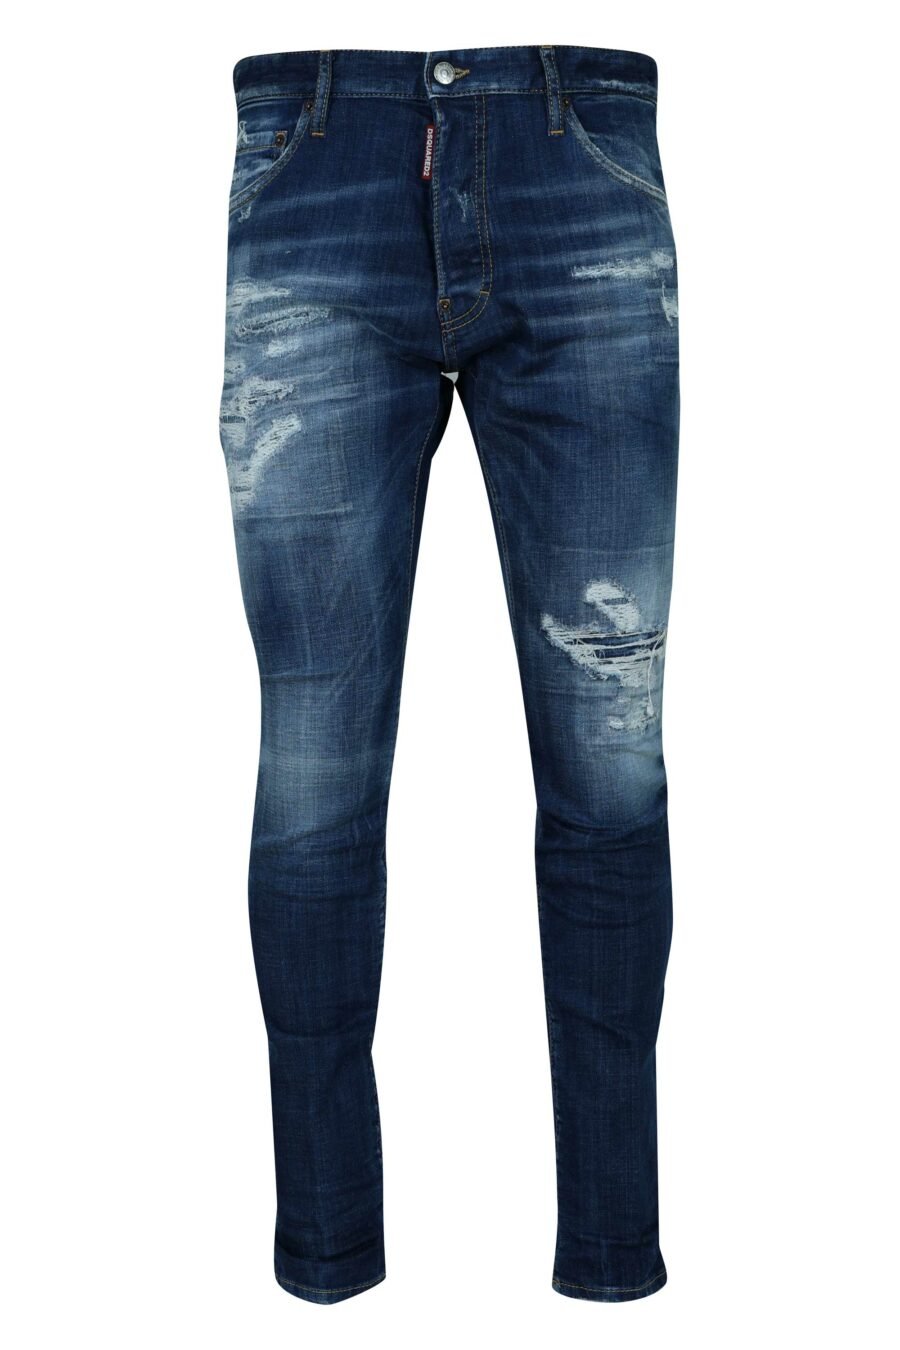 Pantalón vaquero azul oscuro "cool guy jean" desgastado y con rotos - 8054148473402